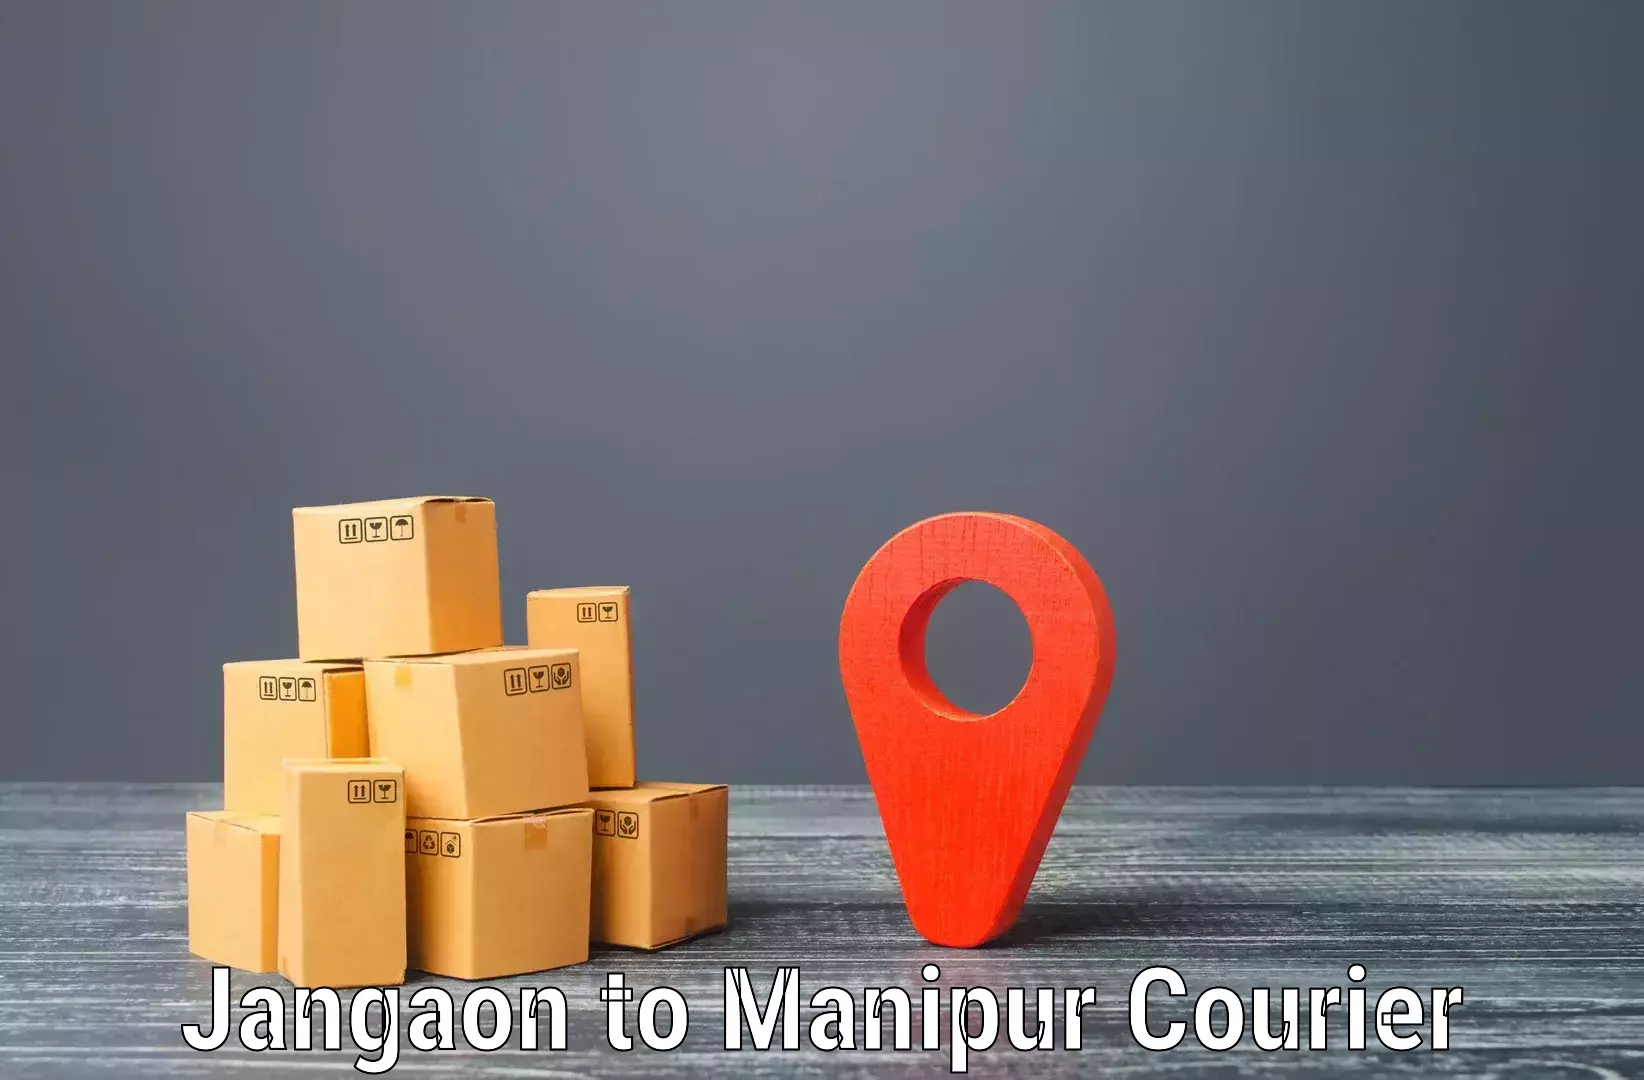 Courier service comparison Jangaon to Kanti